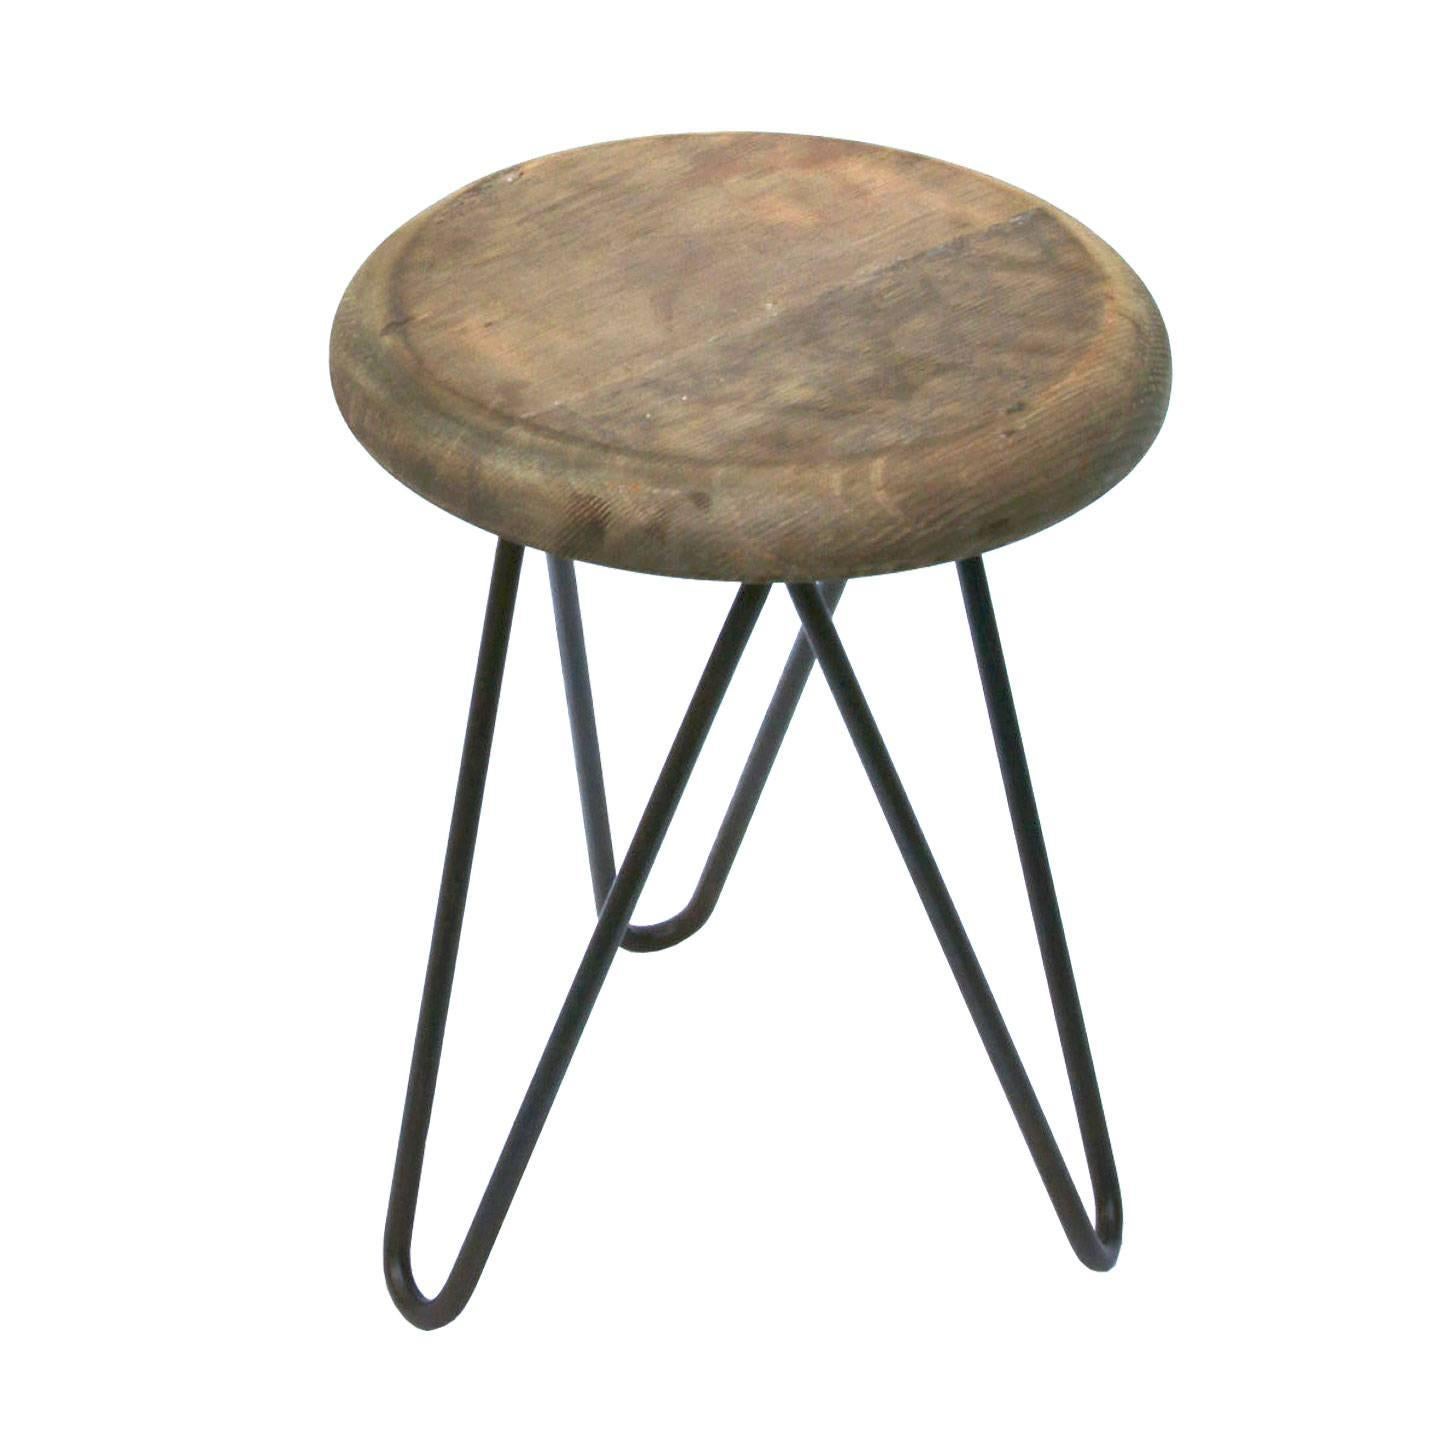 Czech Industrial stools Vintage European Wood Steel Stools